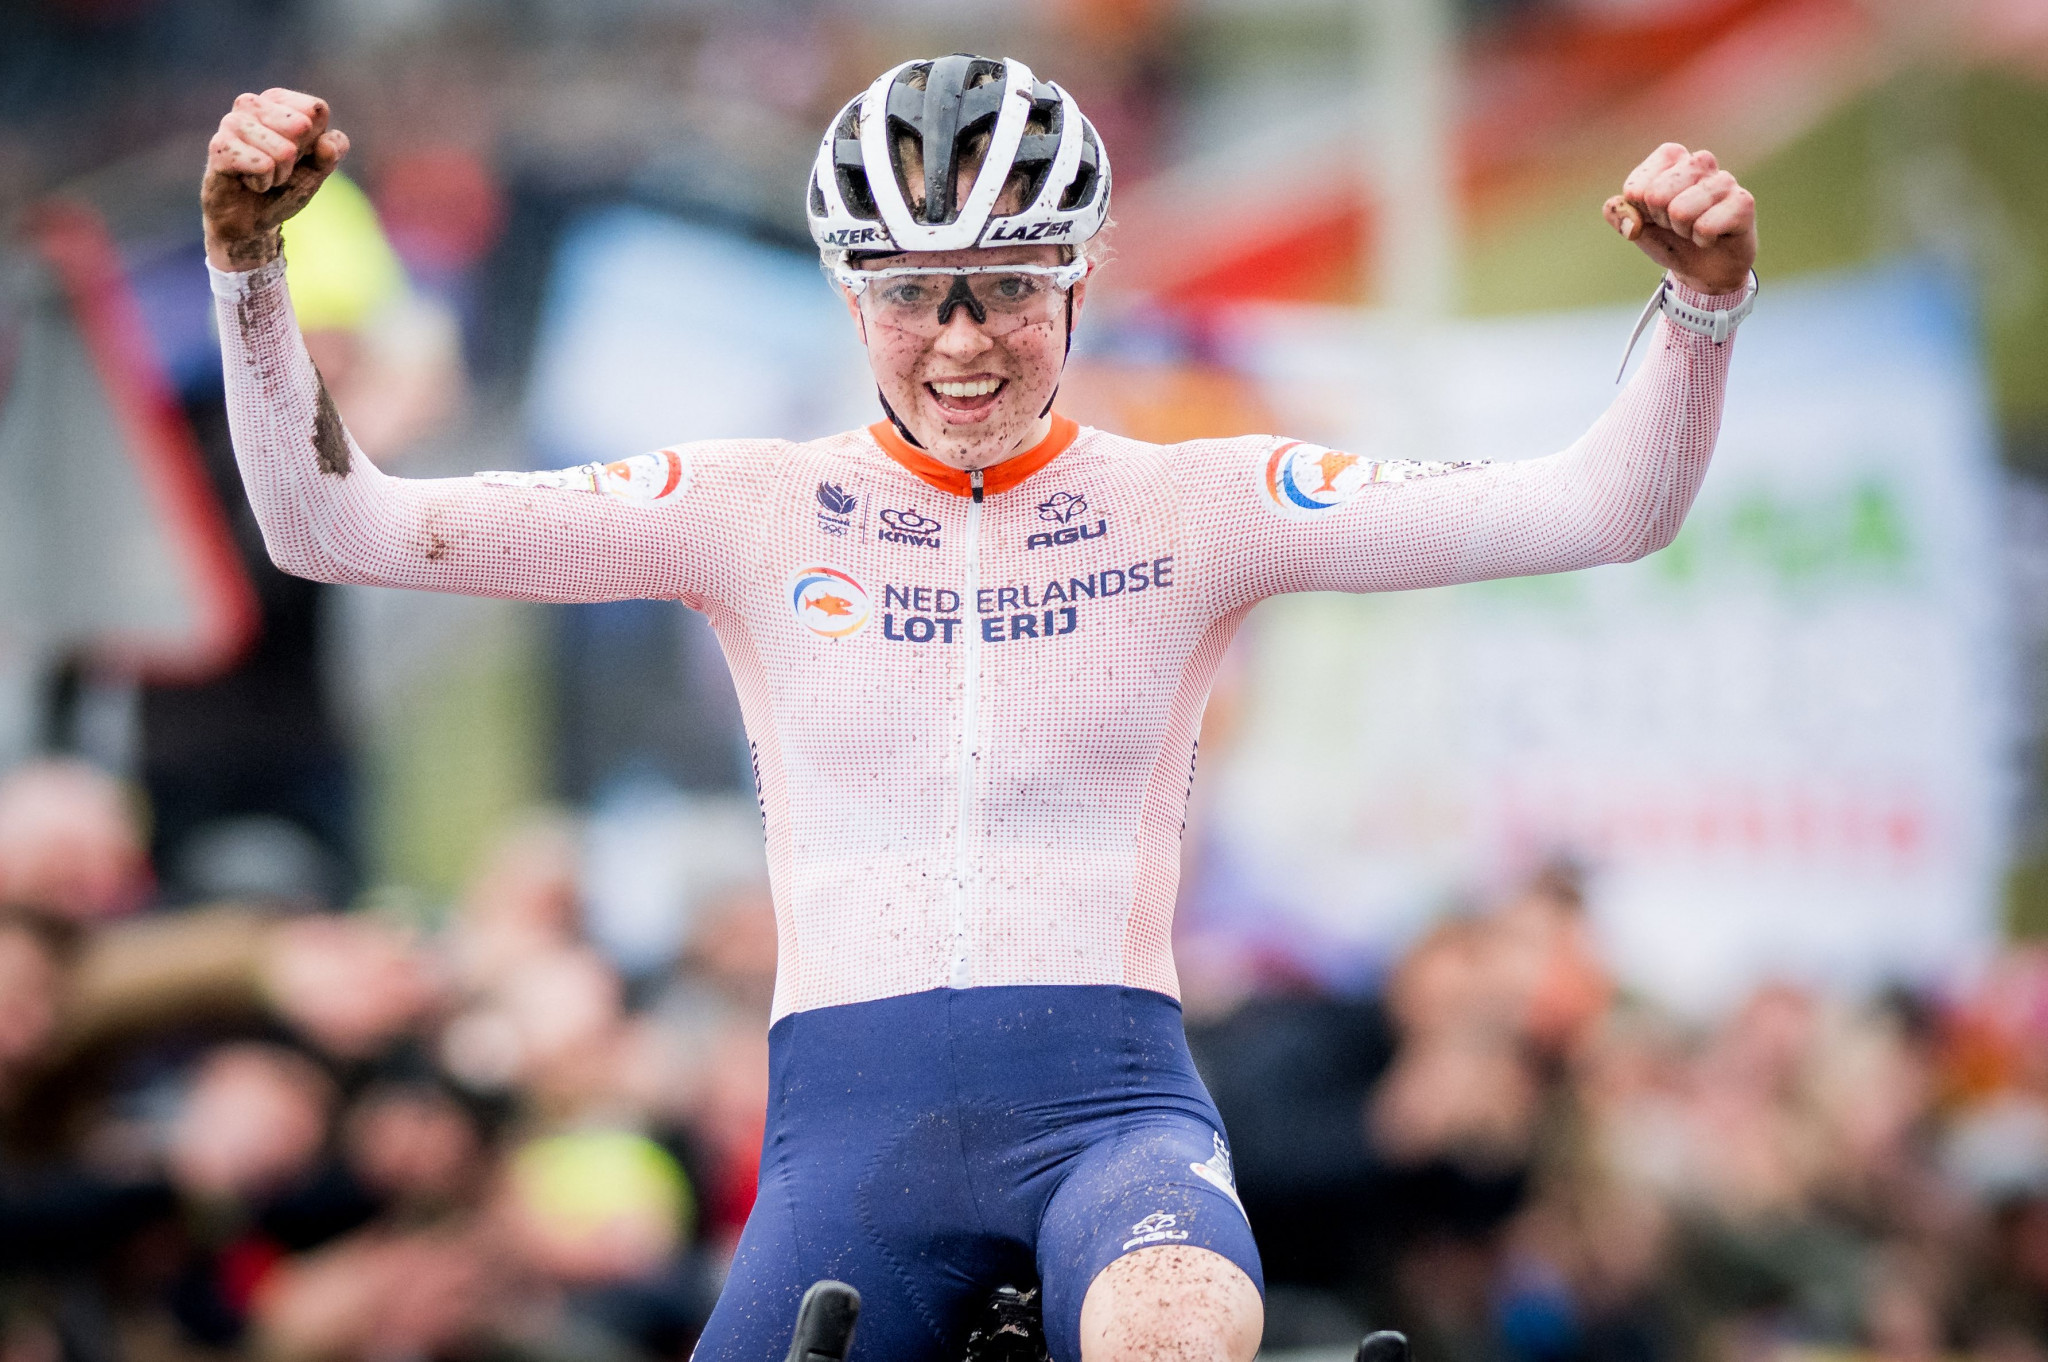 Van Empel wins as Dutch sweep women's elite podium at UCI Cyclo-cross World Championships